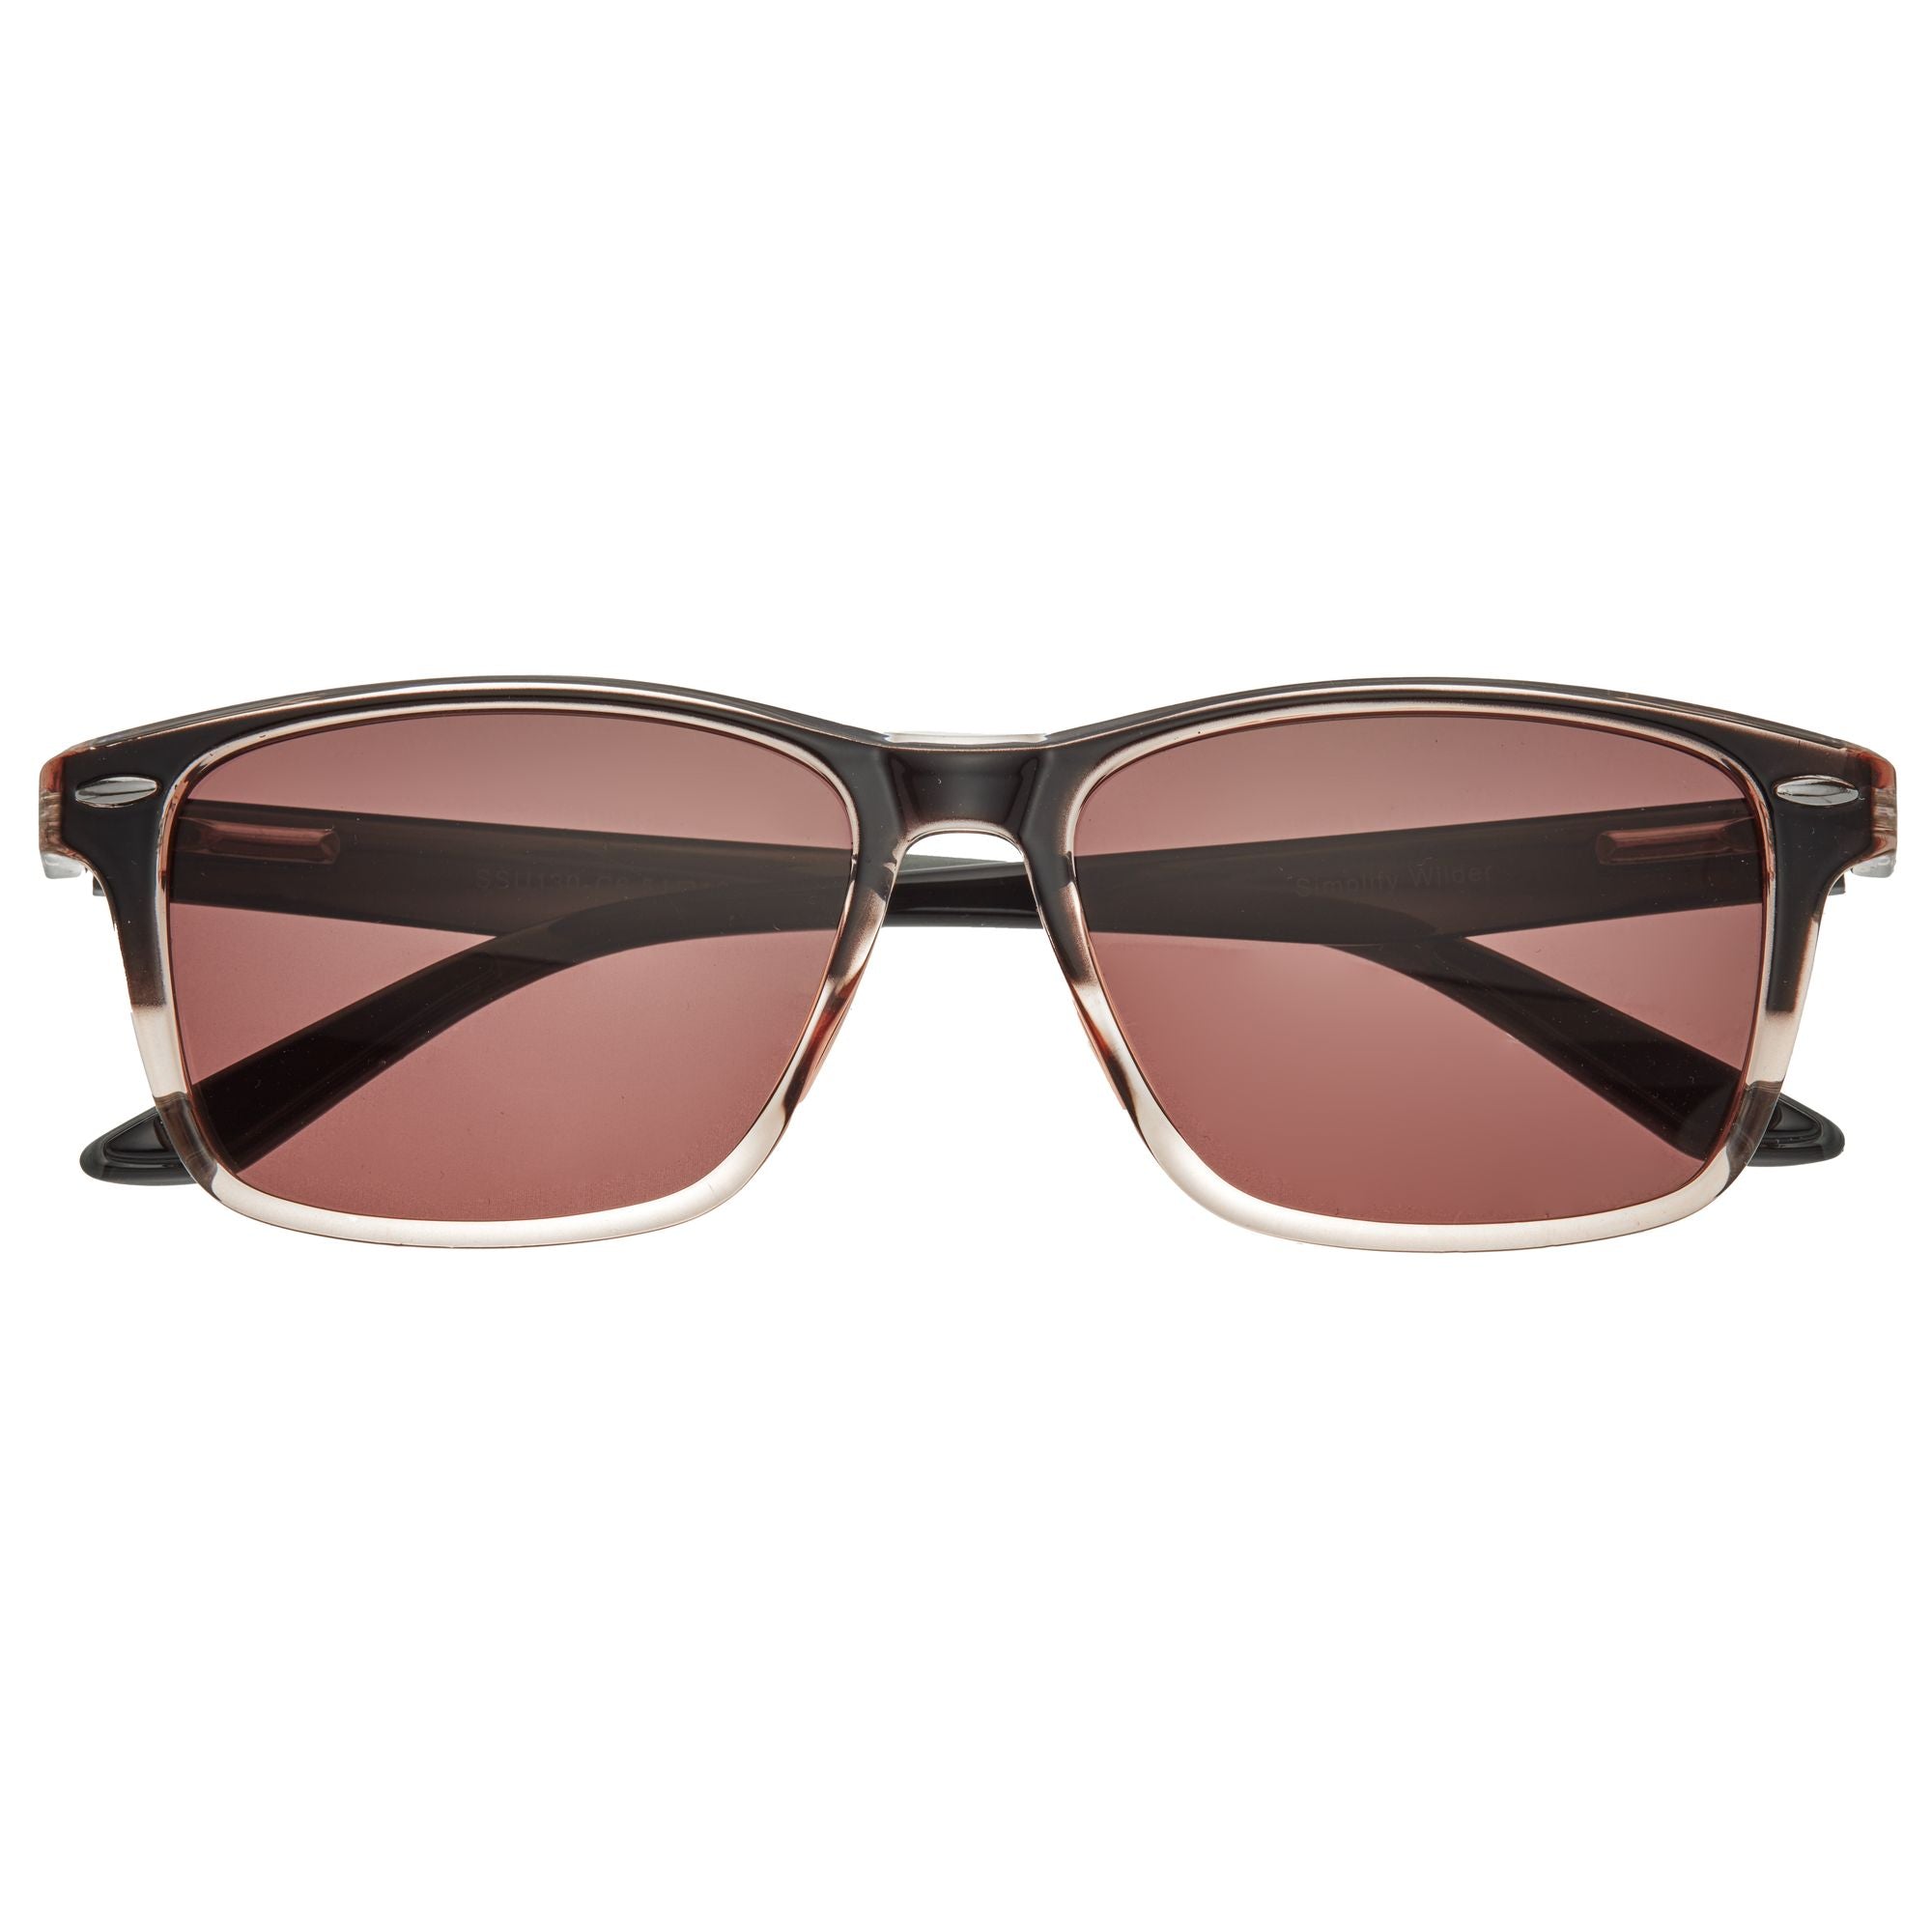 Simplify Wilder Polarized Sunglasses - Pink/Pink - SSU130-C6